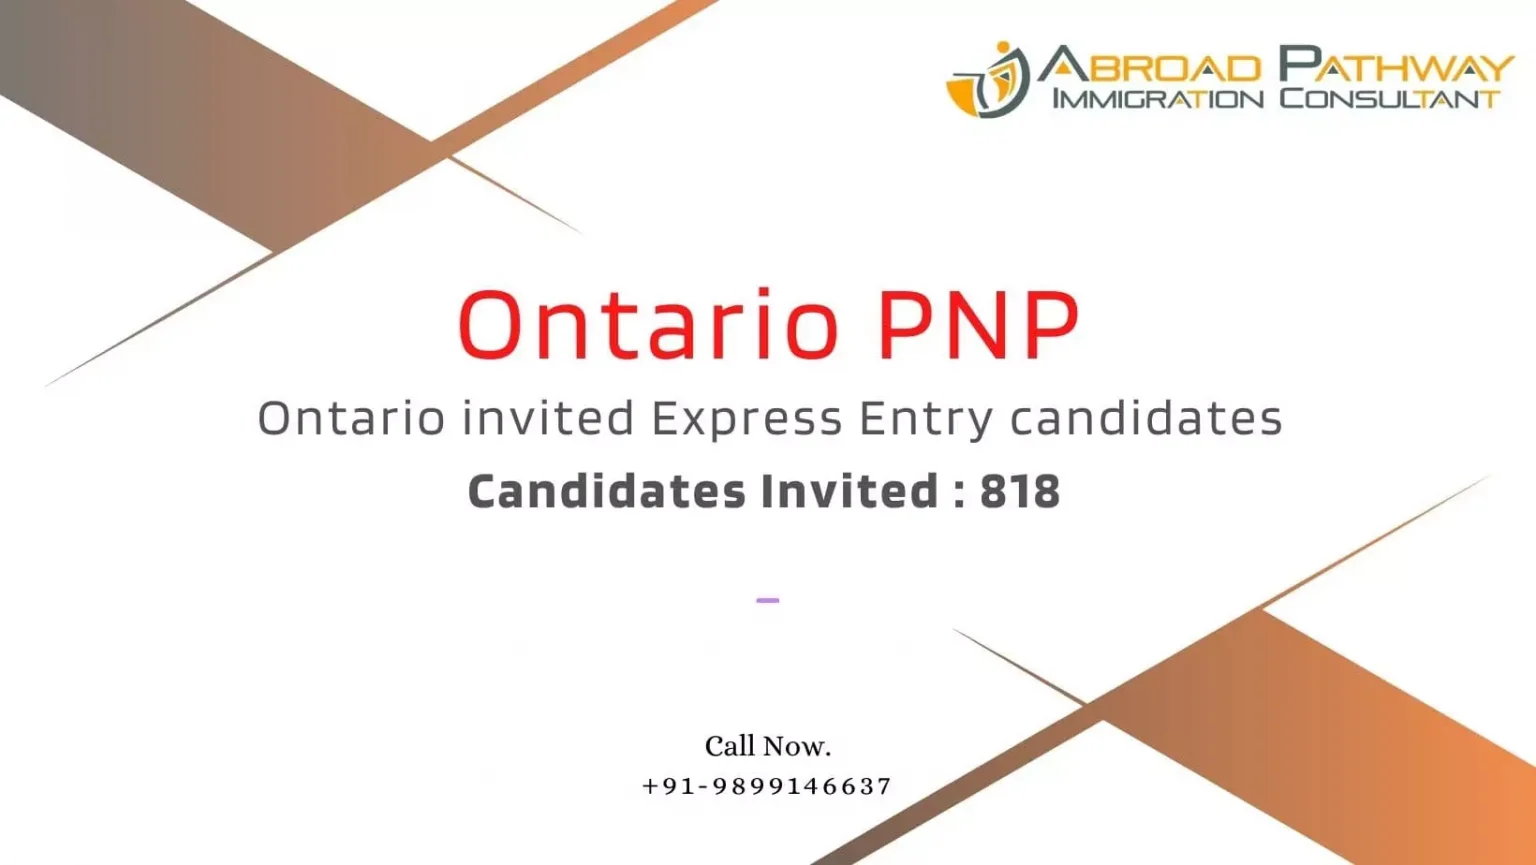 Ontario Draw update removes CRS cap again, invited 818 PNP Candidates